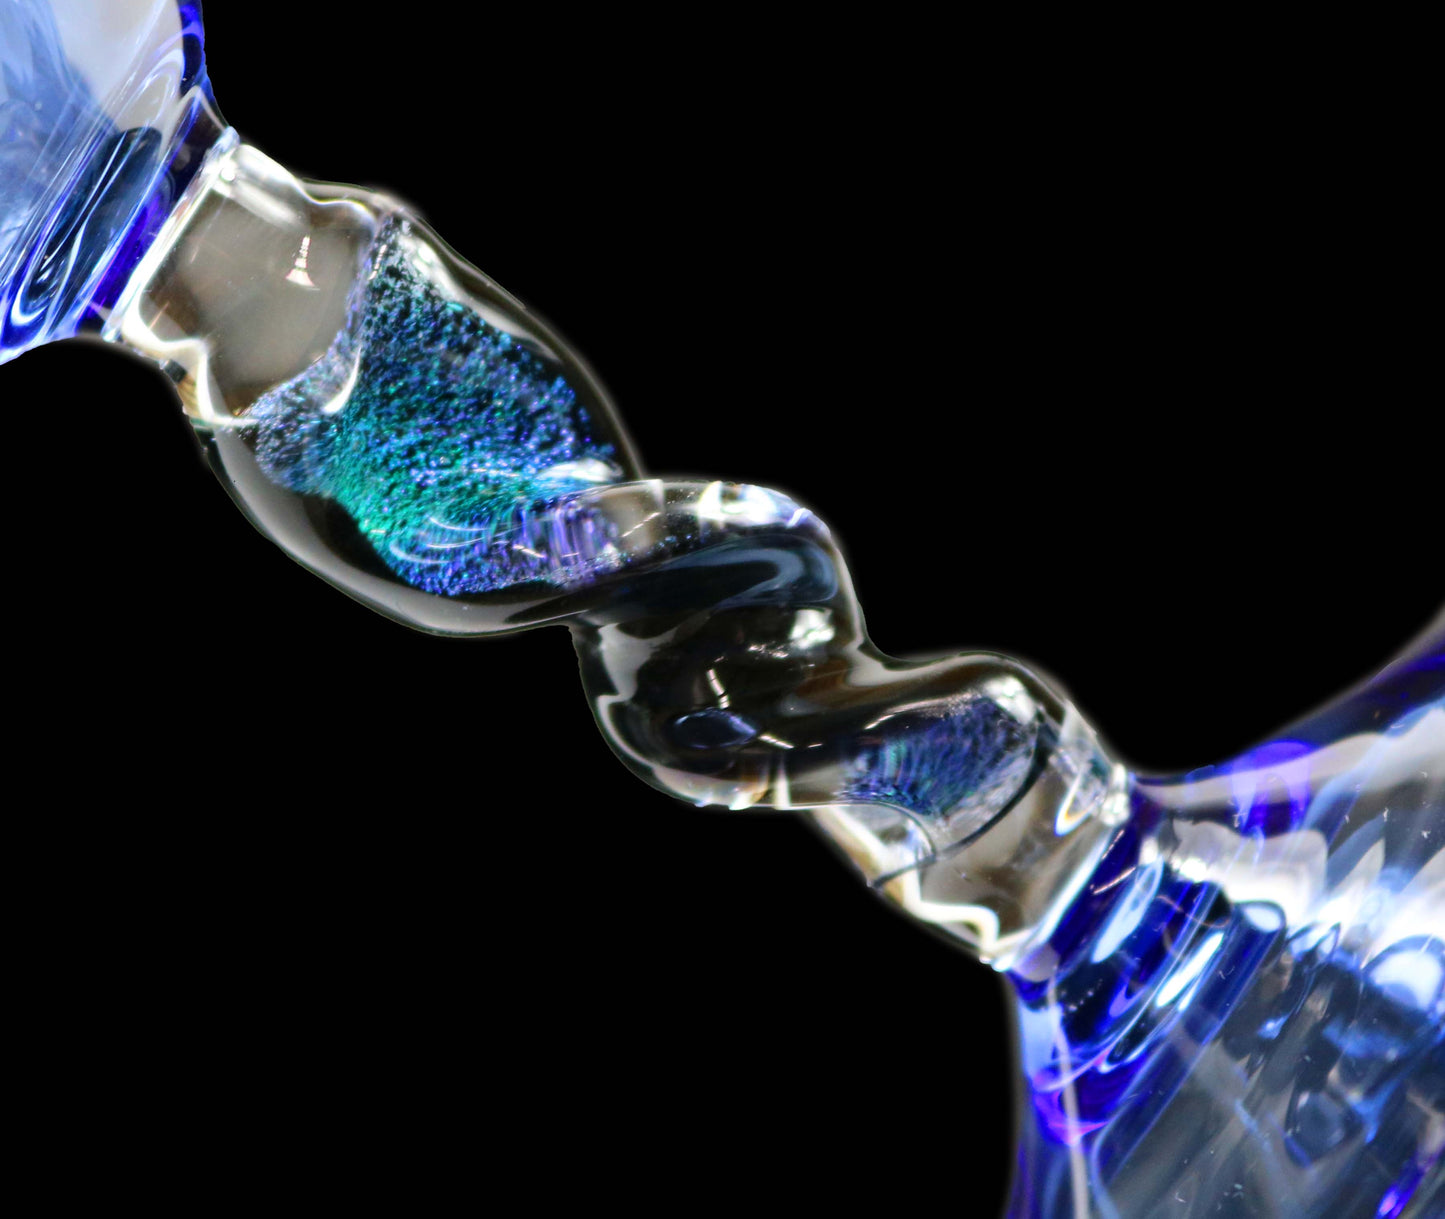 Light Blue Goblet with Dichro Stem by Phil Sundling